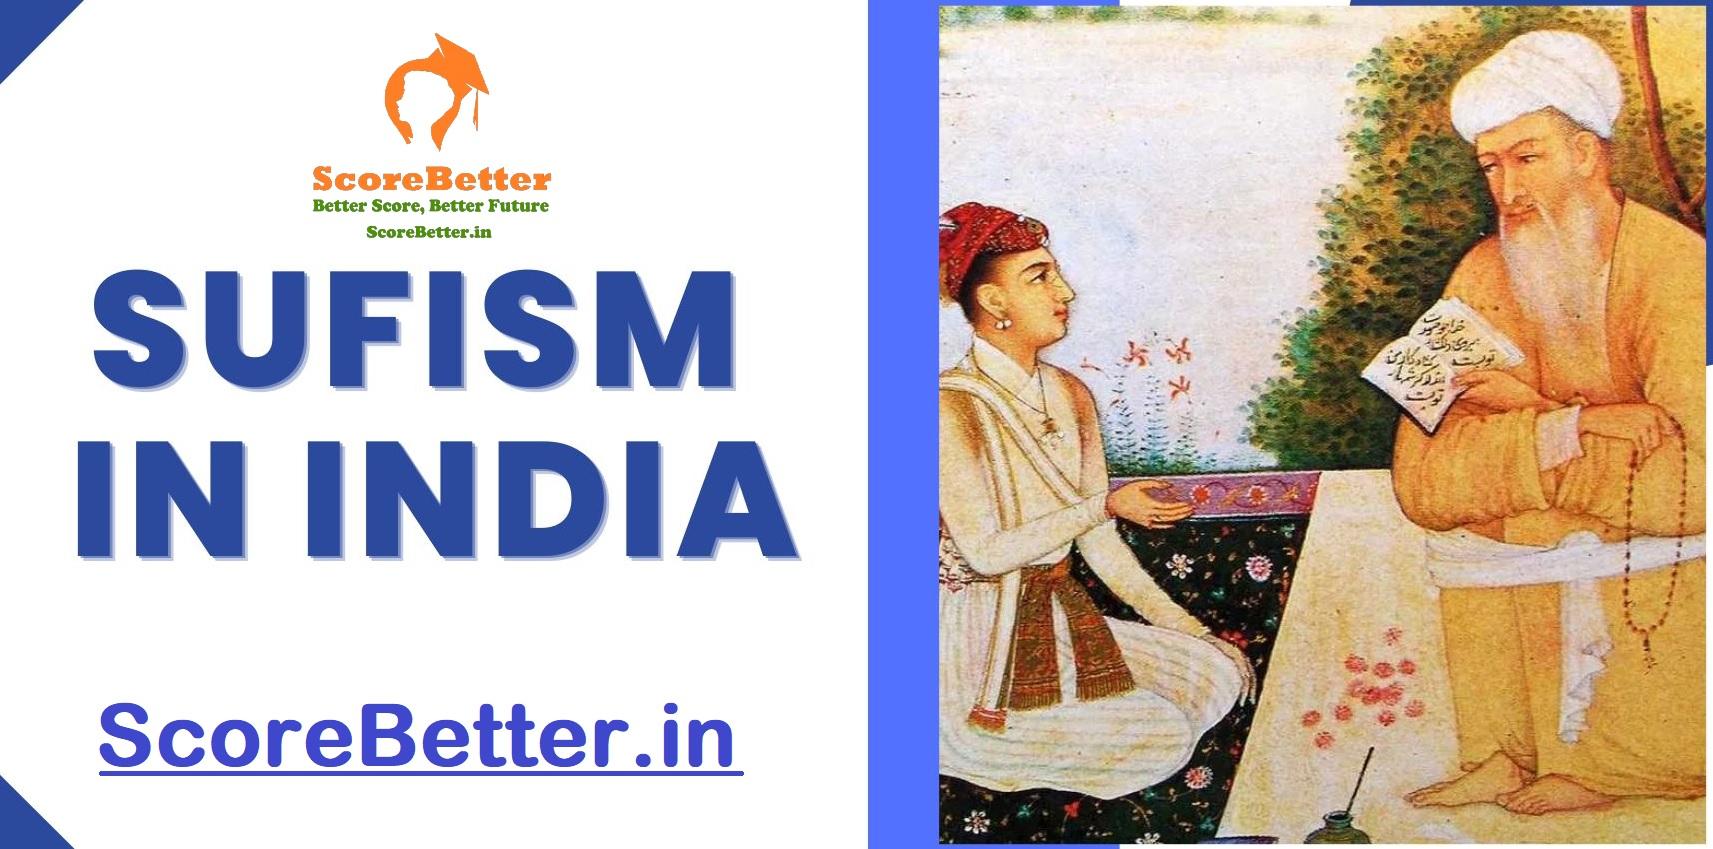 Sufism Movement in India